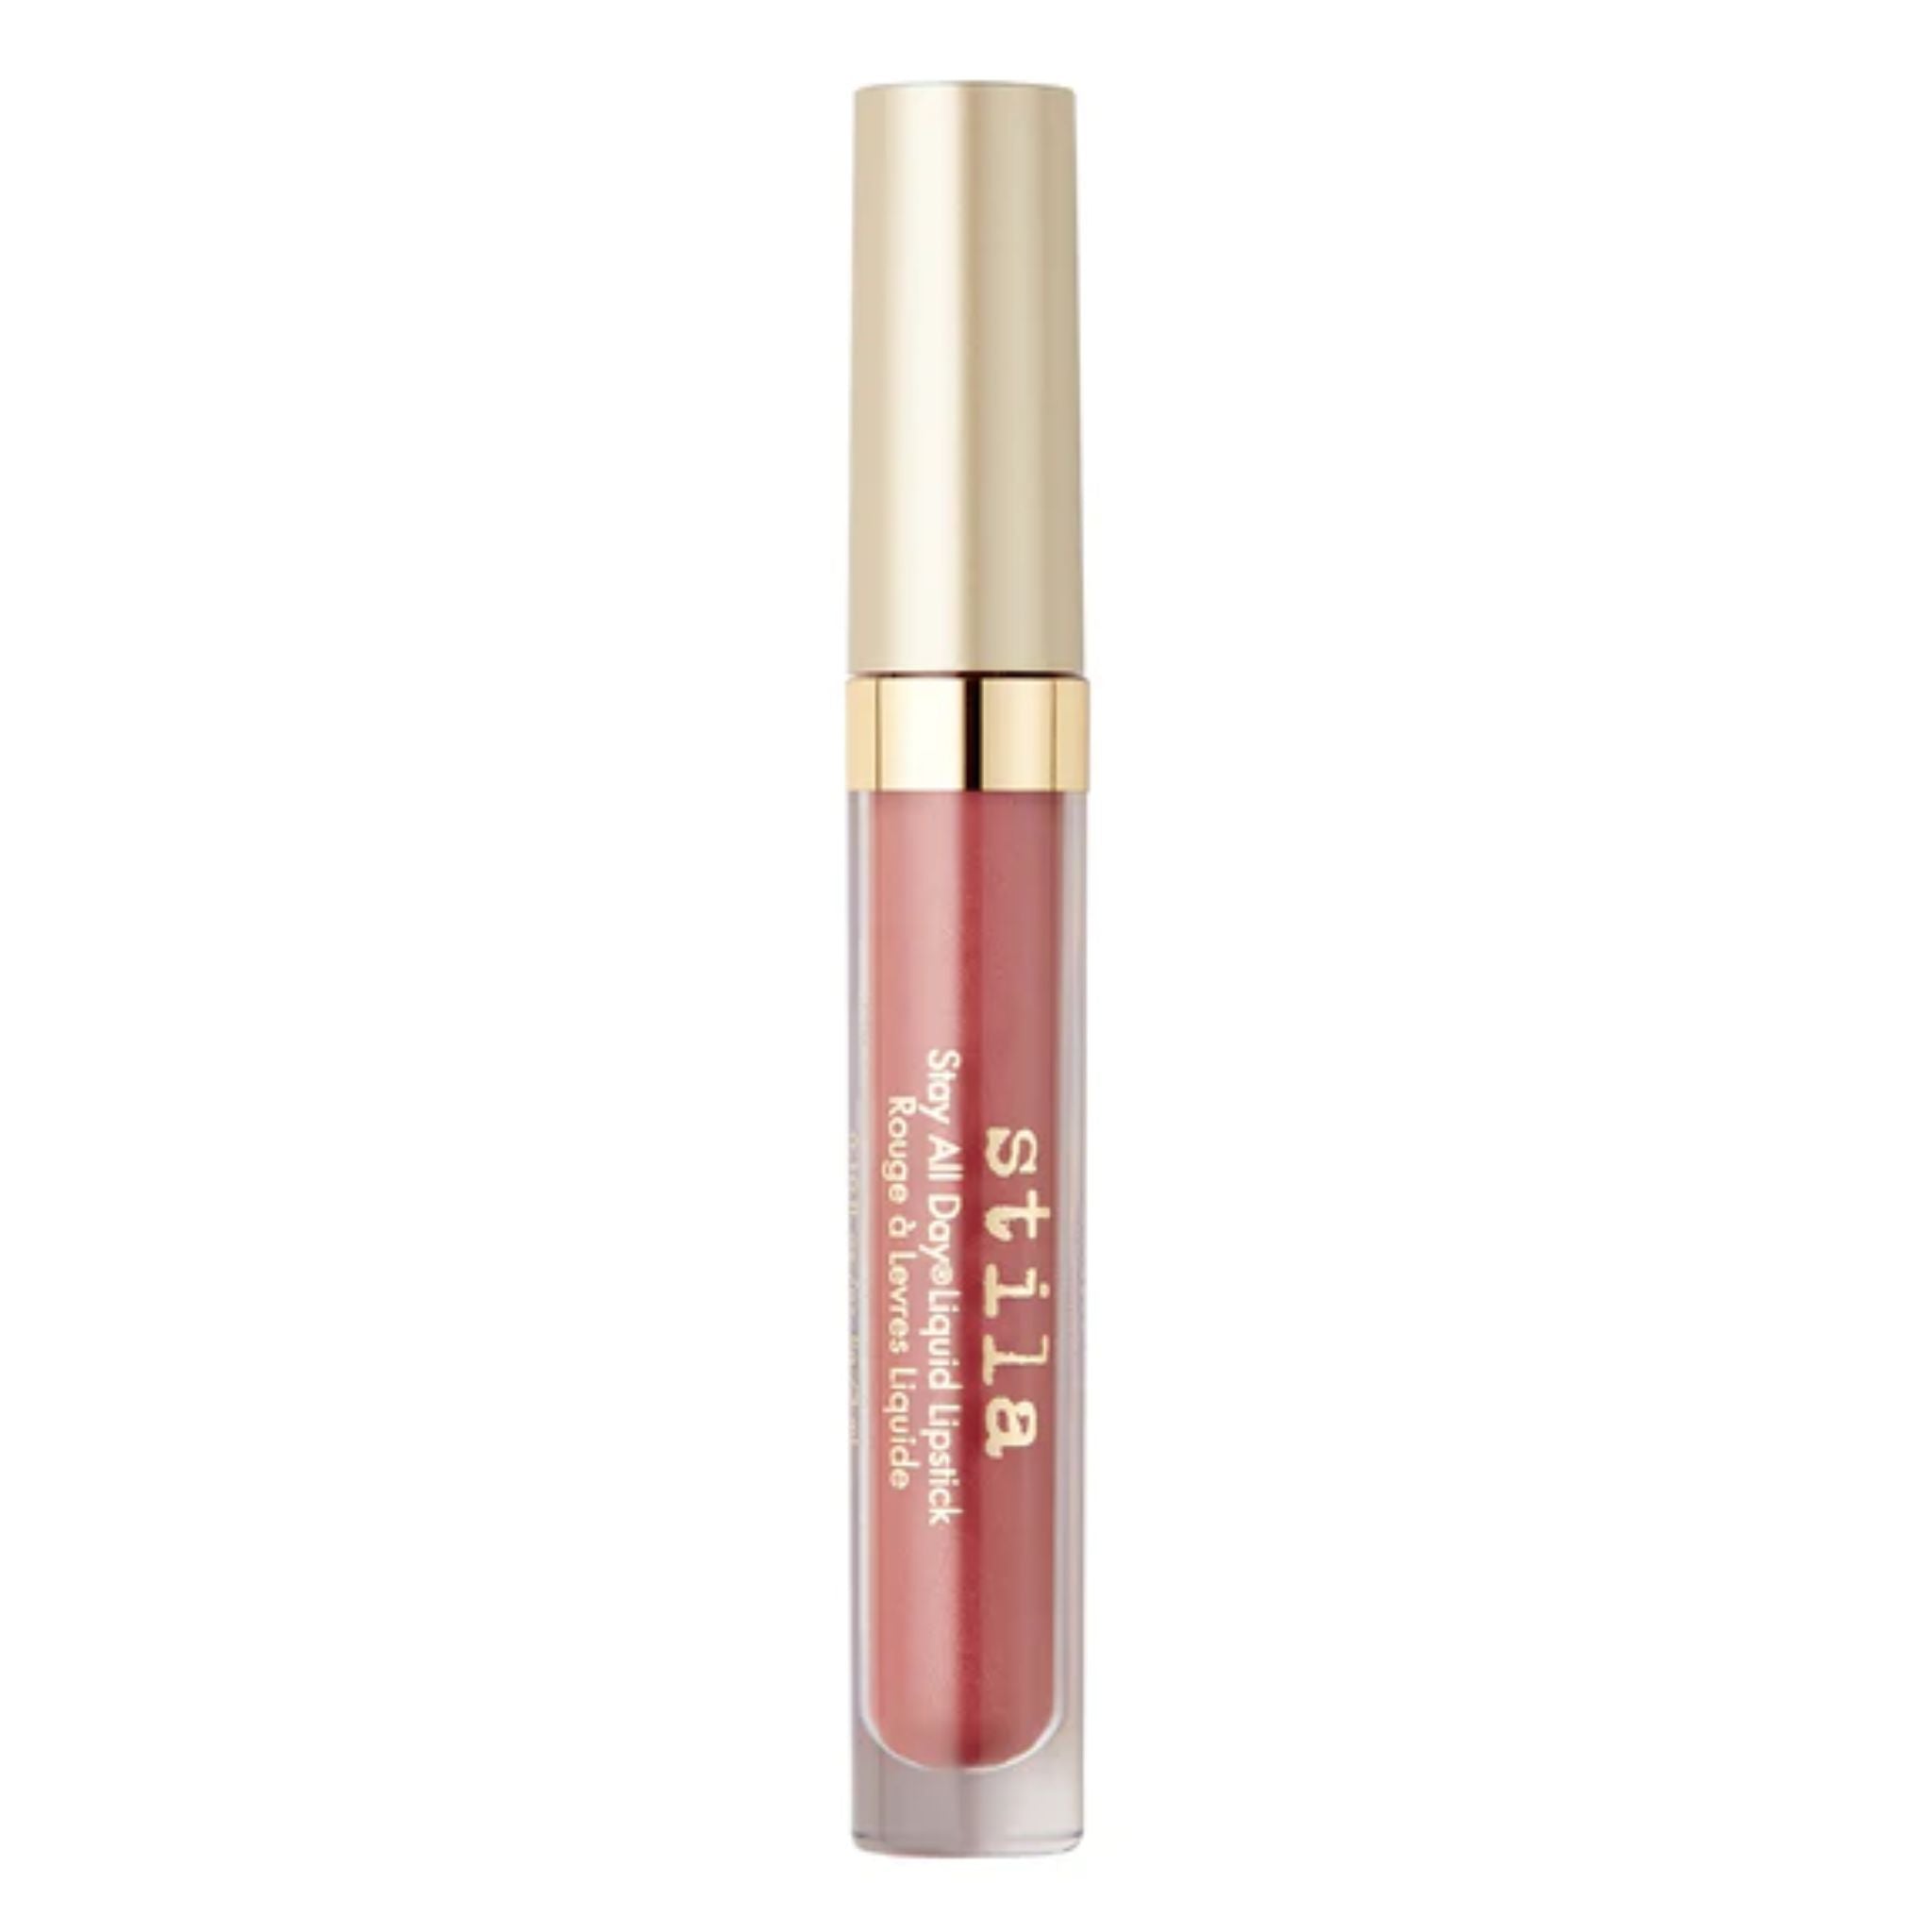 Stila - Stay All Day Shimmer Liquid Lipstick